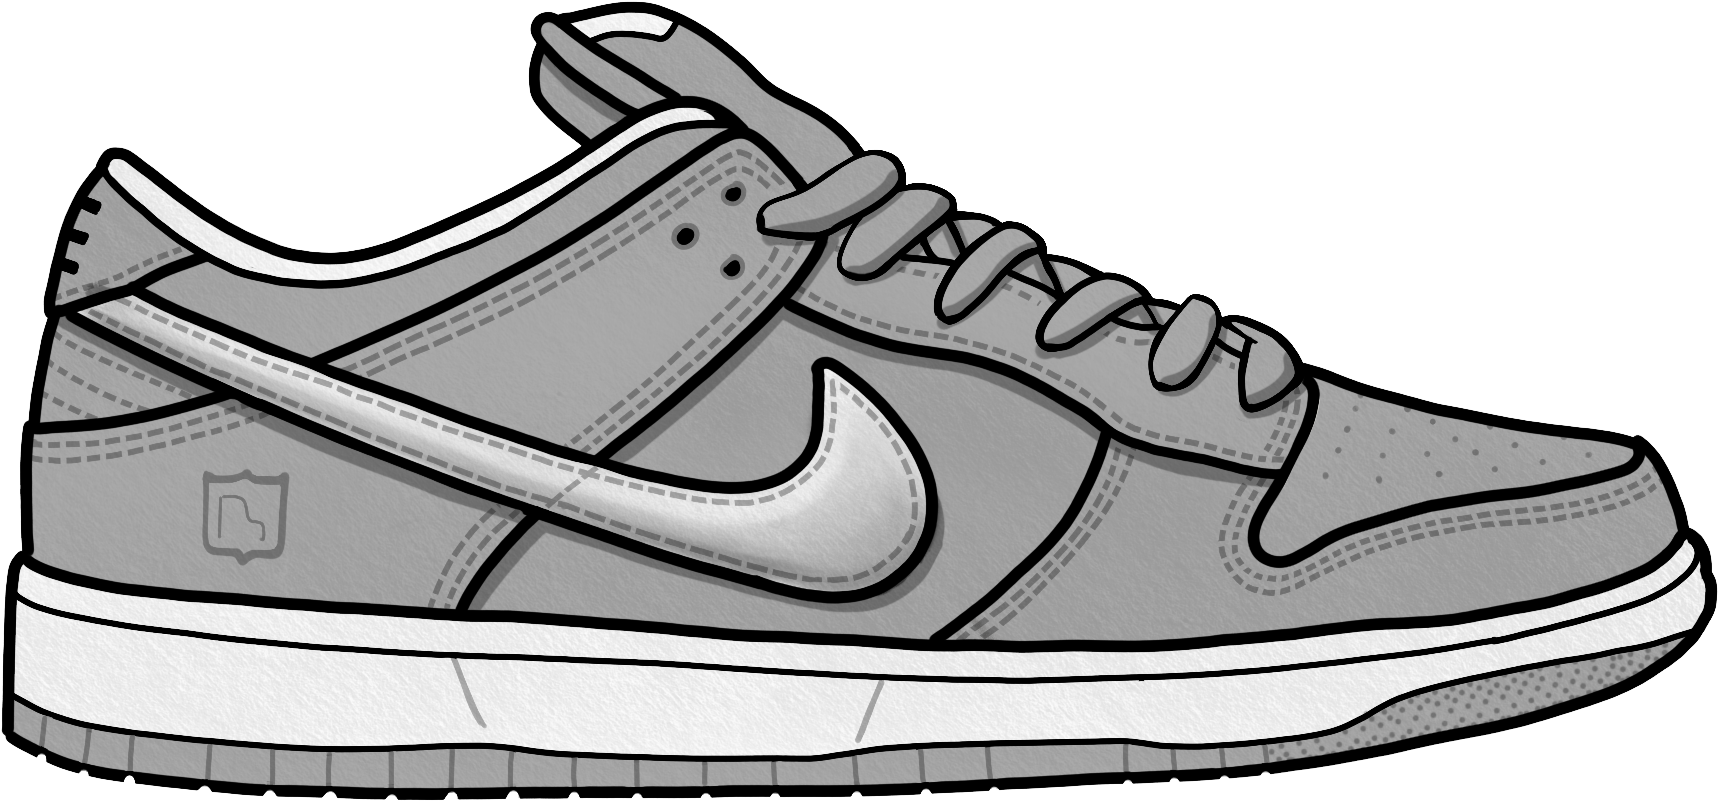 Nike Sneaker Illustration PNG